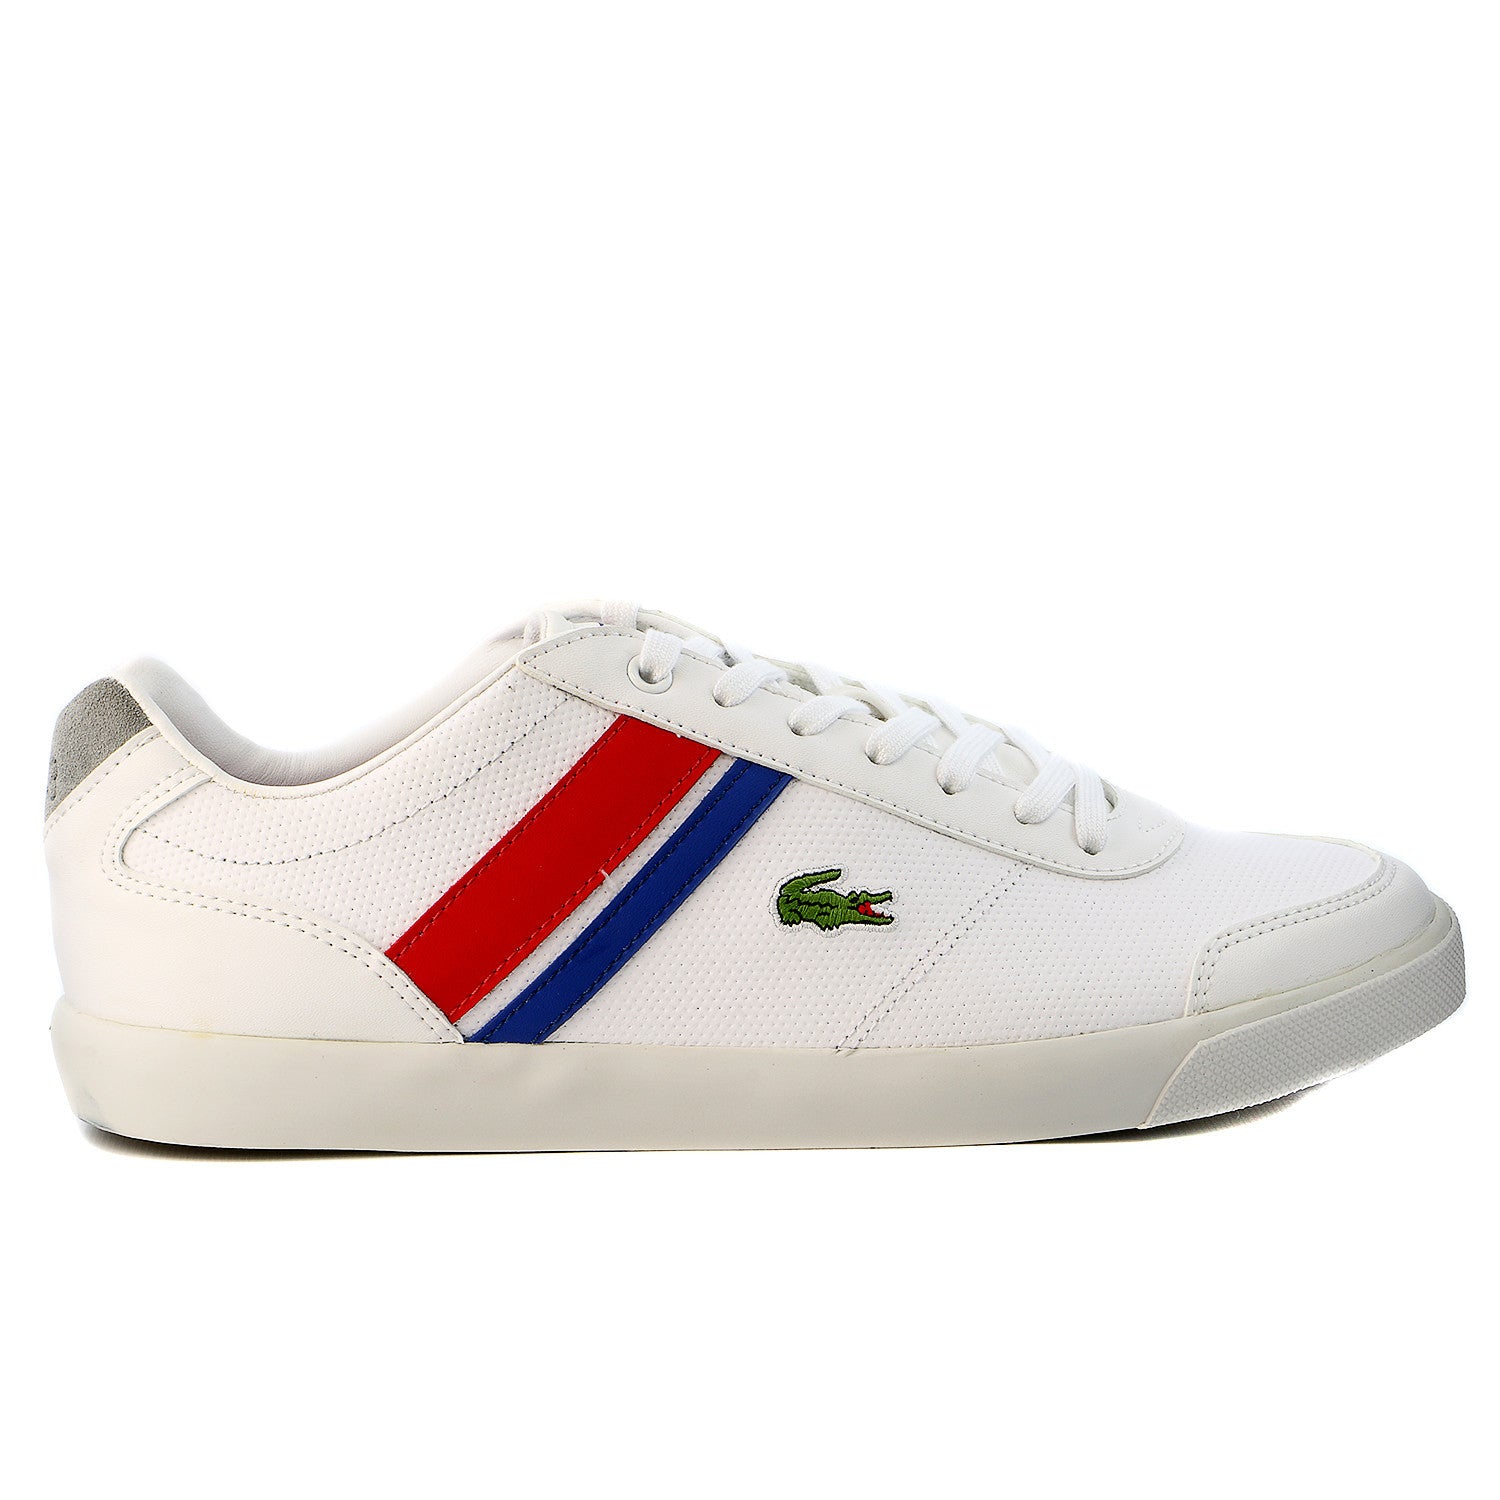 Lacoste Comba PRI Fashion Sneaker Shoe - White/Red - Mens - Shoplifestyle